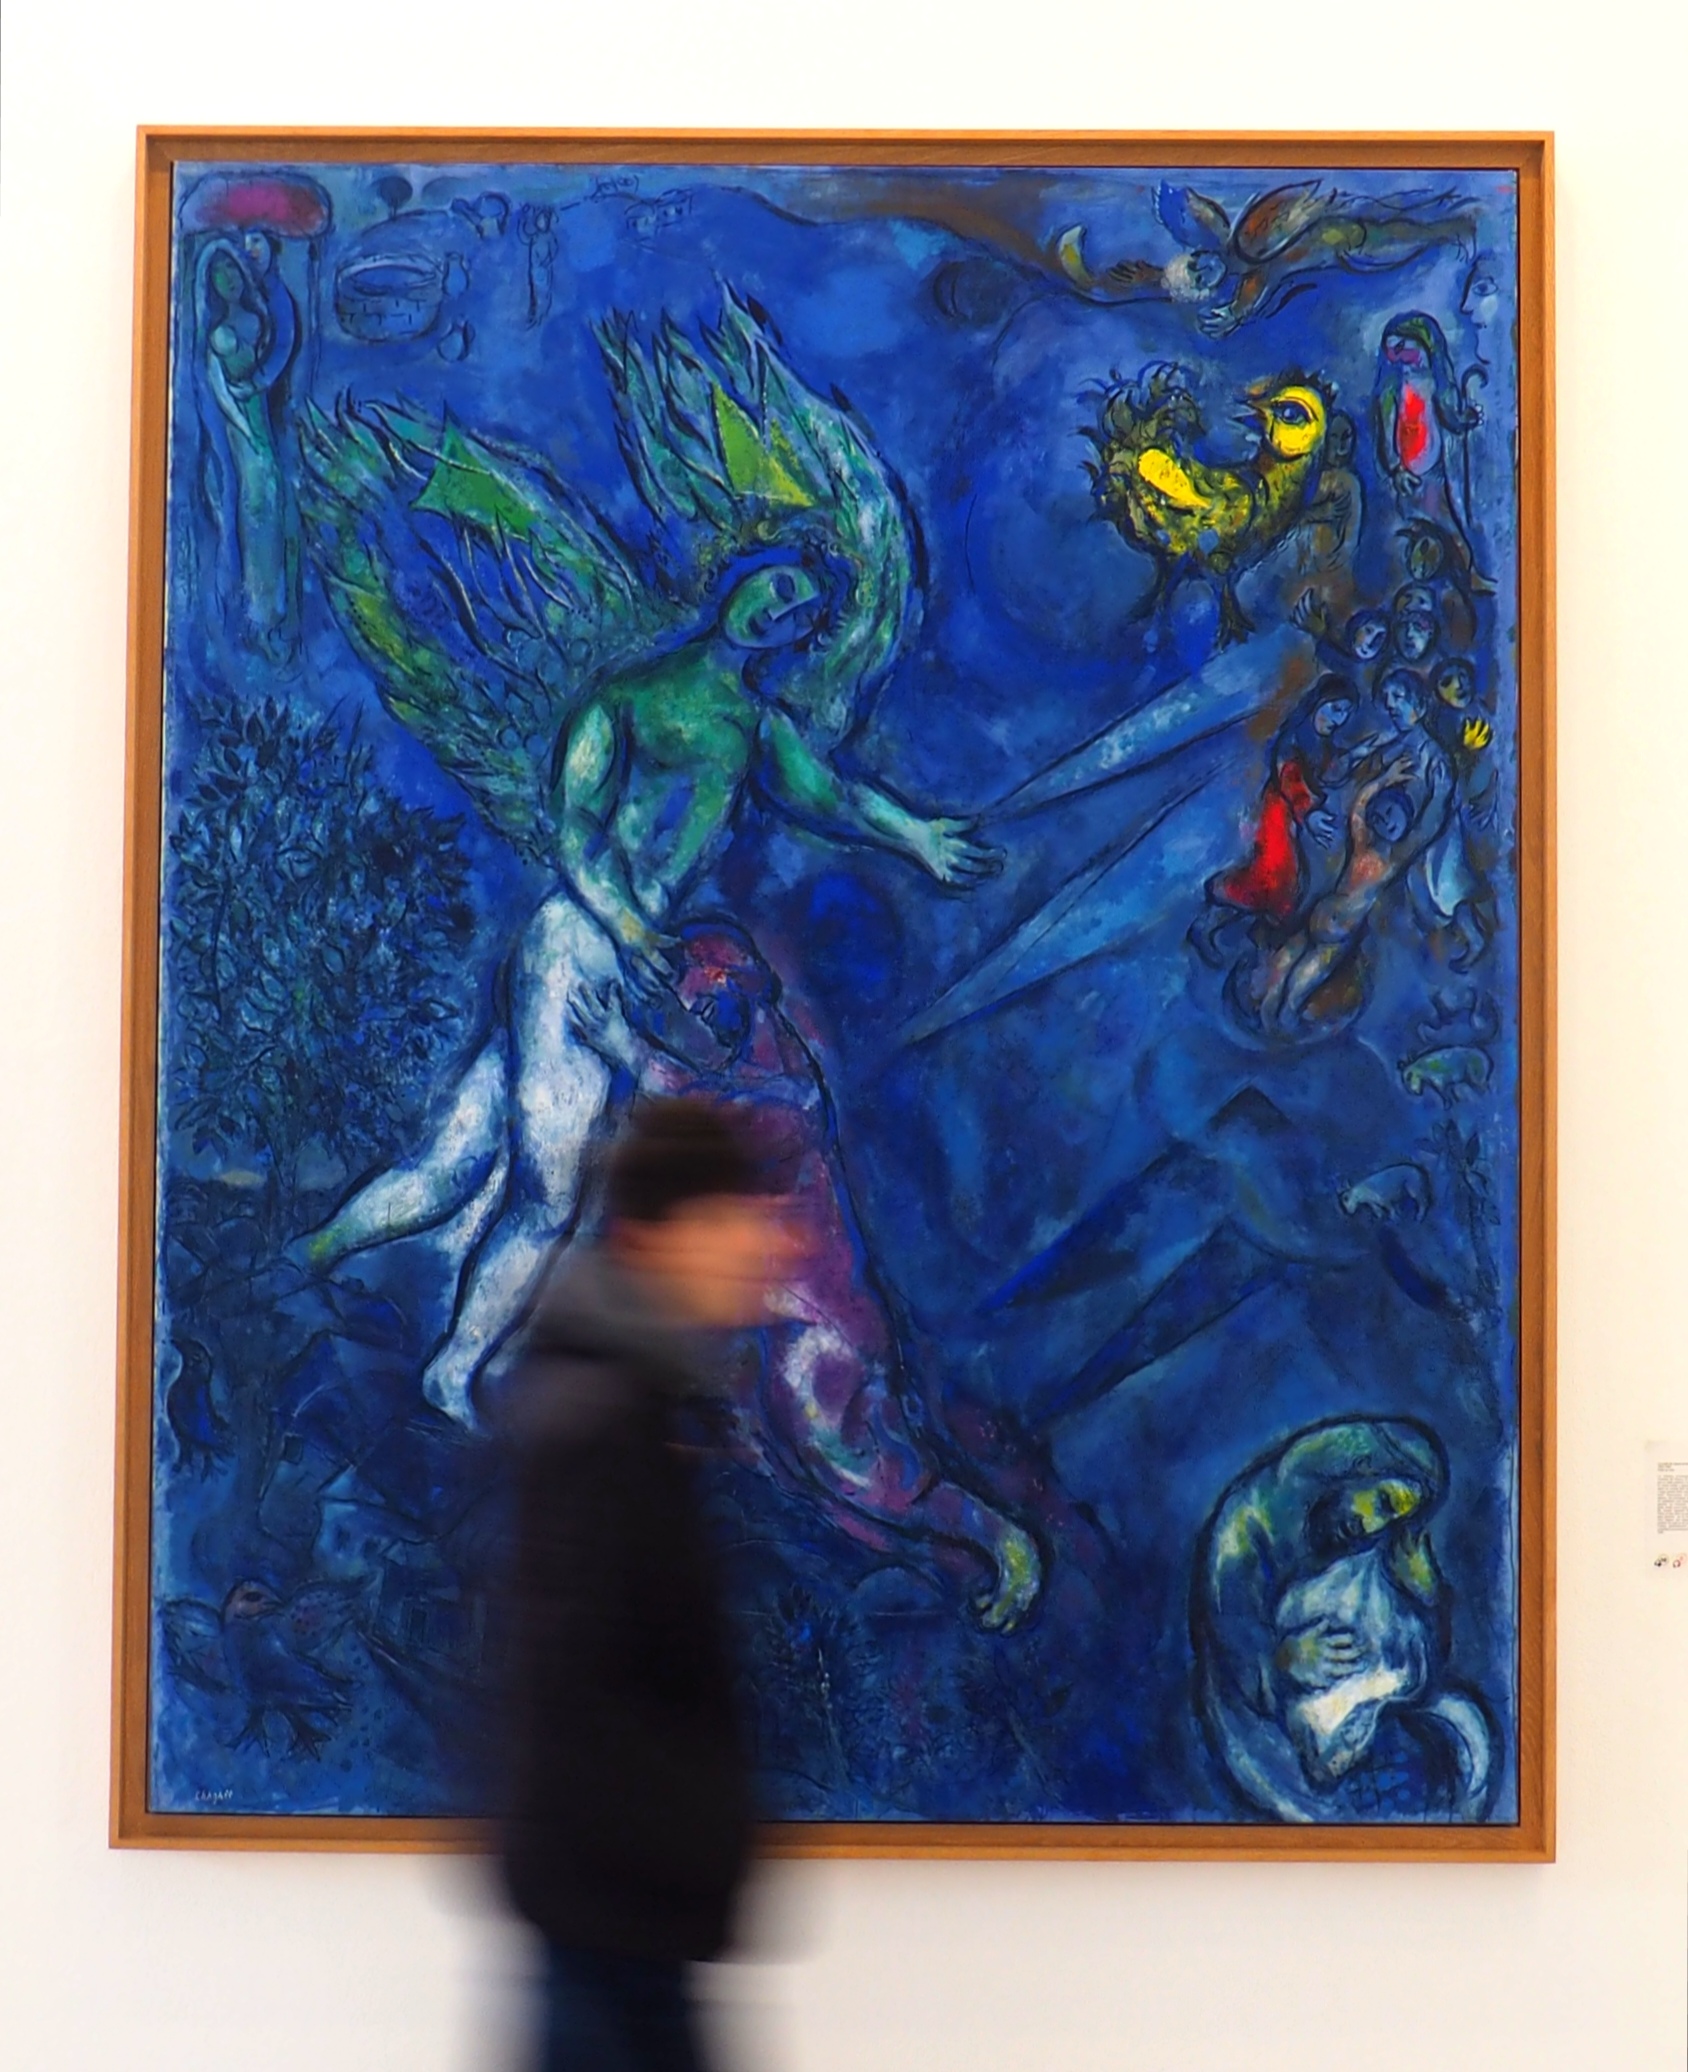 Walking into Chagall ...